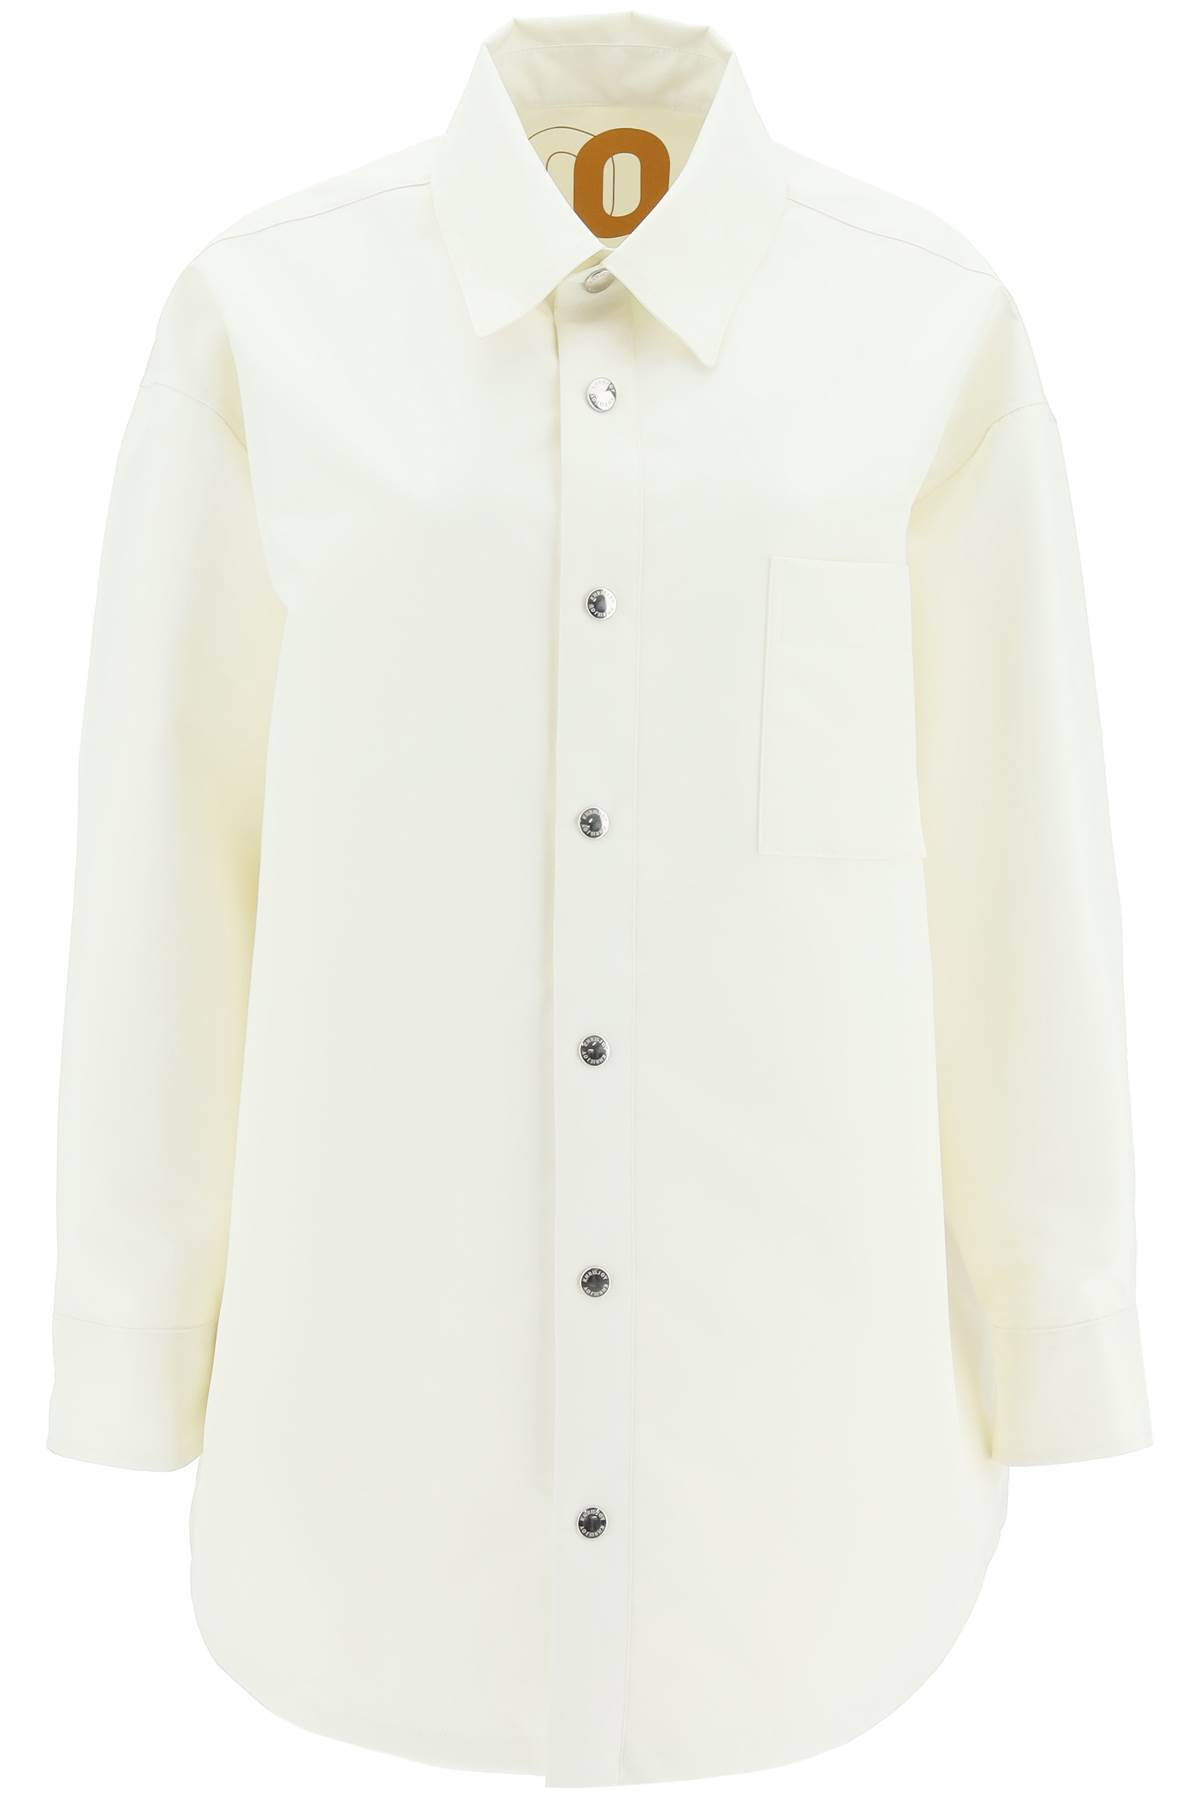 Shop Khrisjoy Oversized Boyfriend Shirt Jacket In White